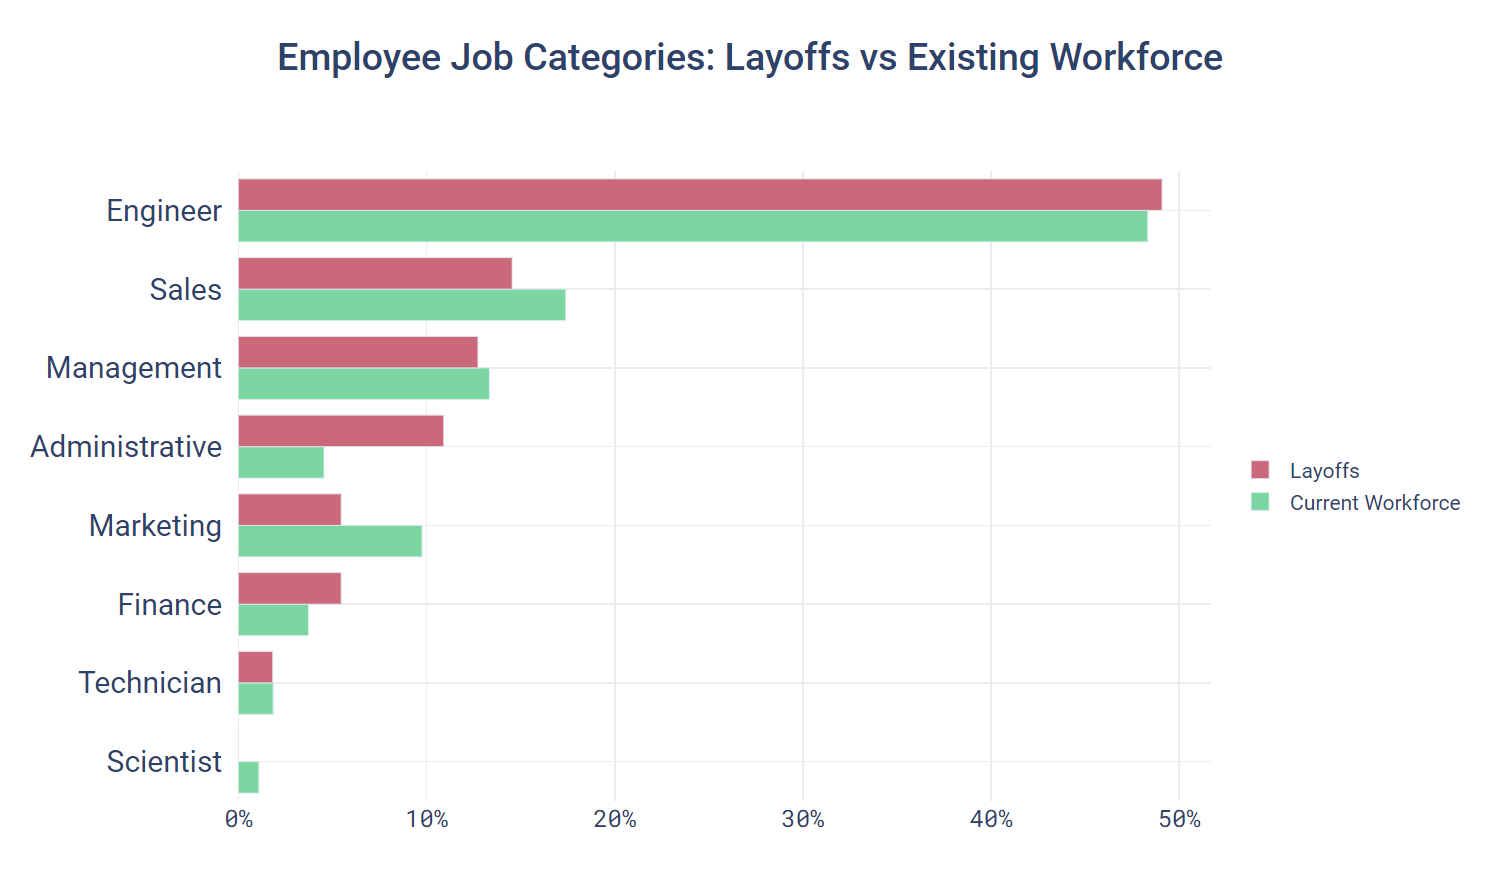 Employee Job Categories: Layoffs vs Existing Workforce